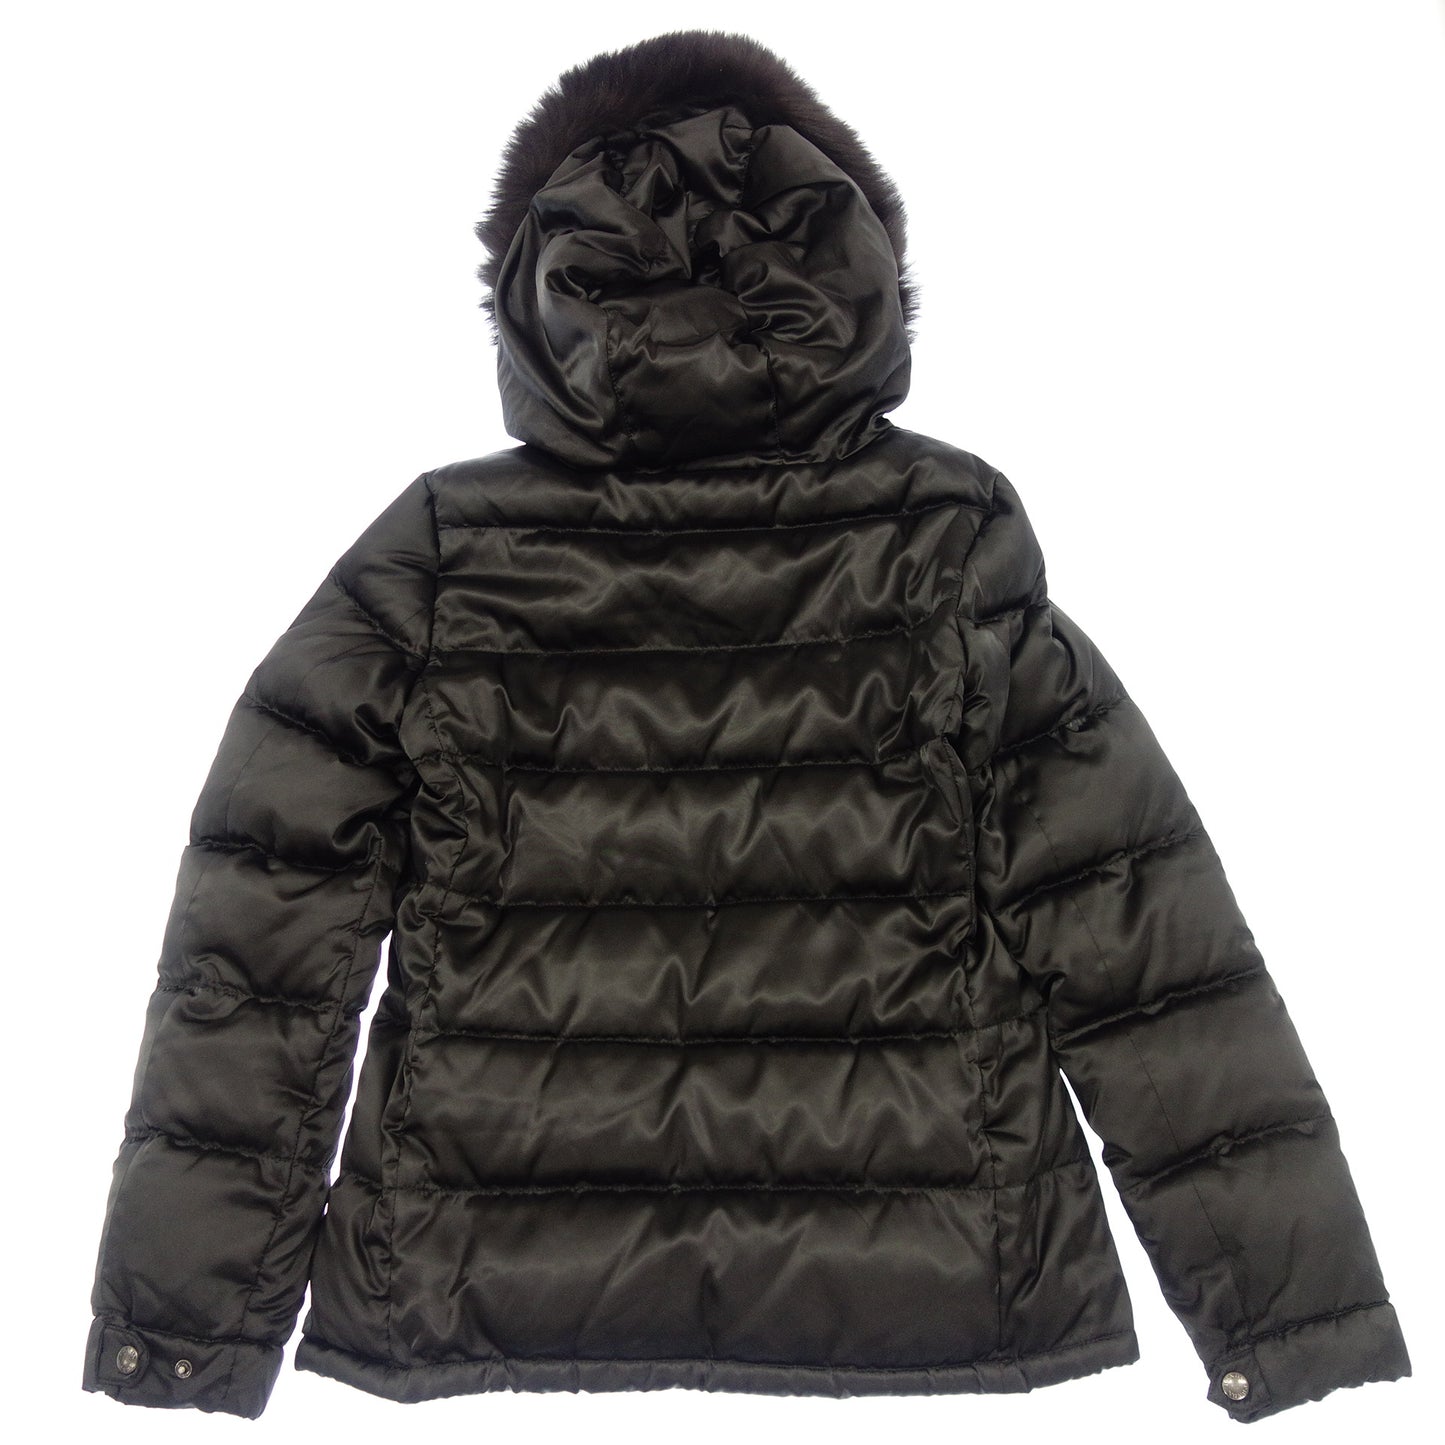 Good condition ◆ Prada down jacket real fur 28A060 ladies size 42 black PRADA [AFA4] 